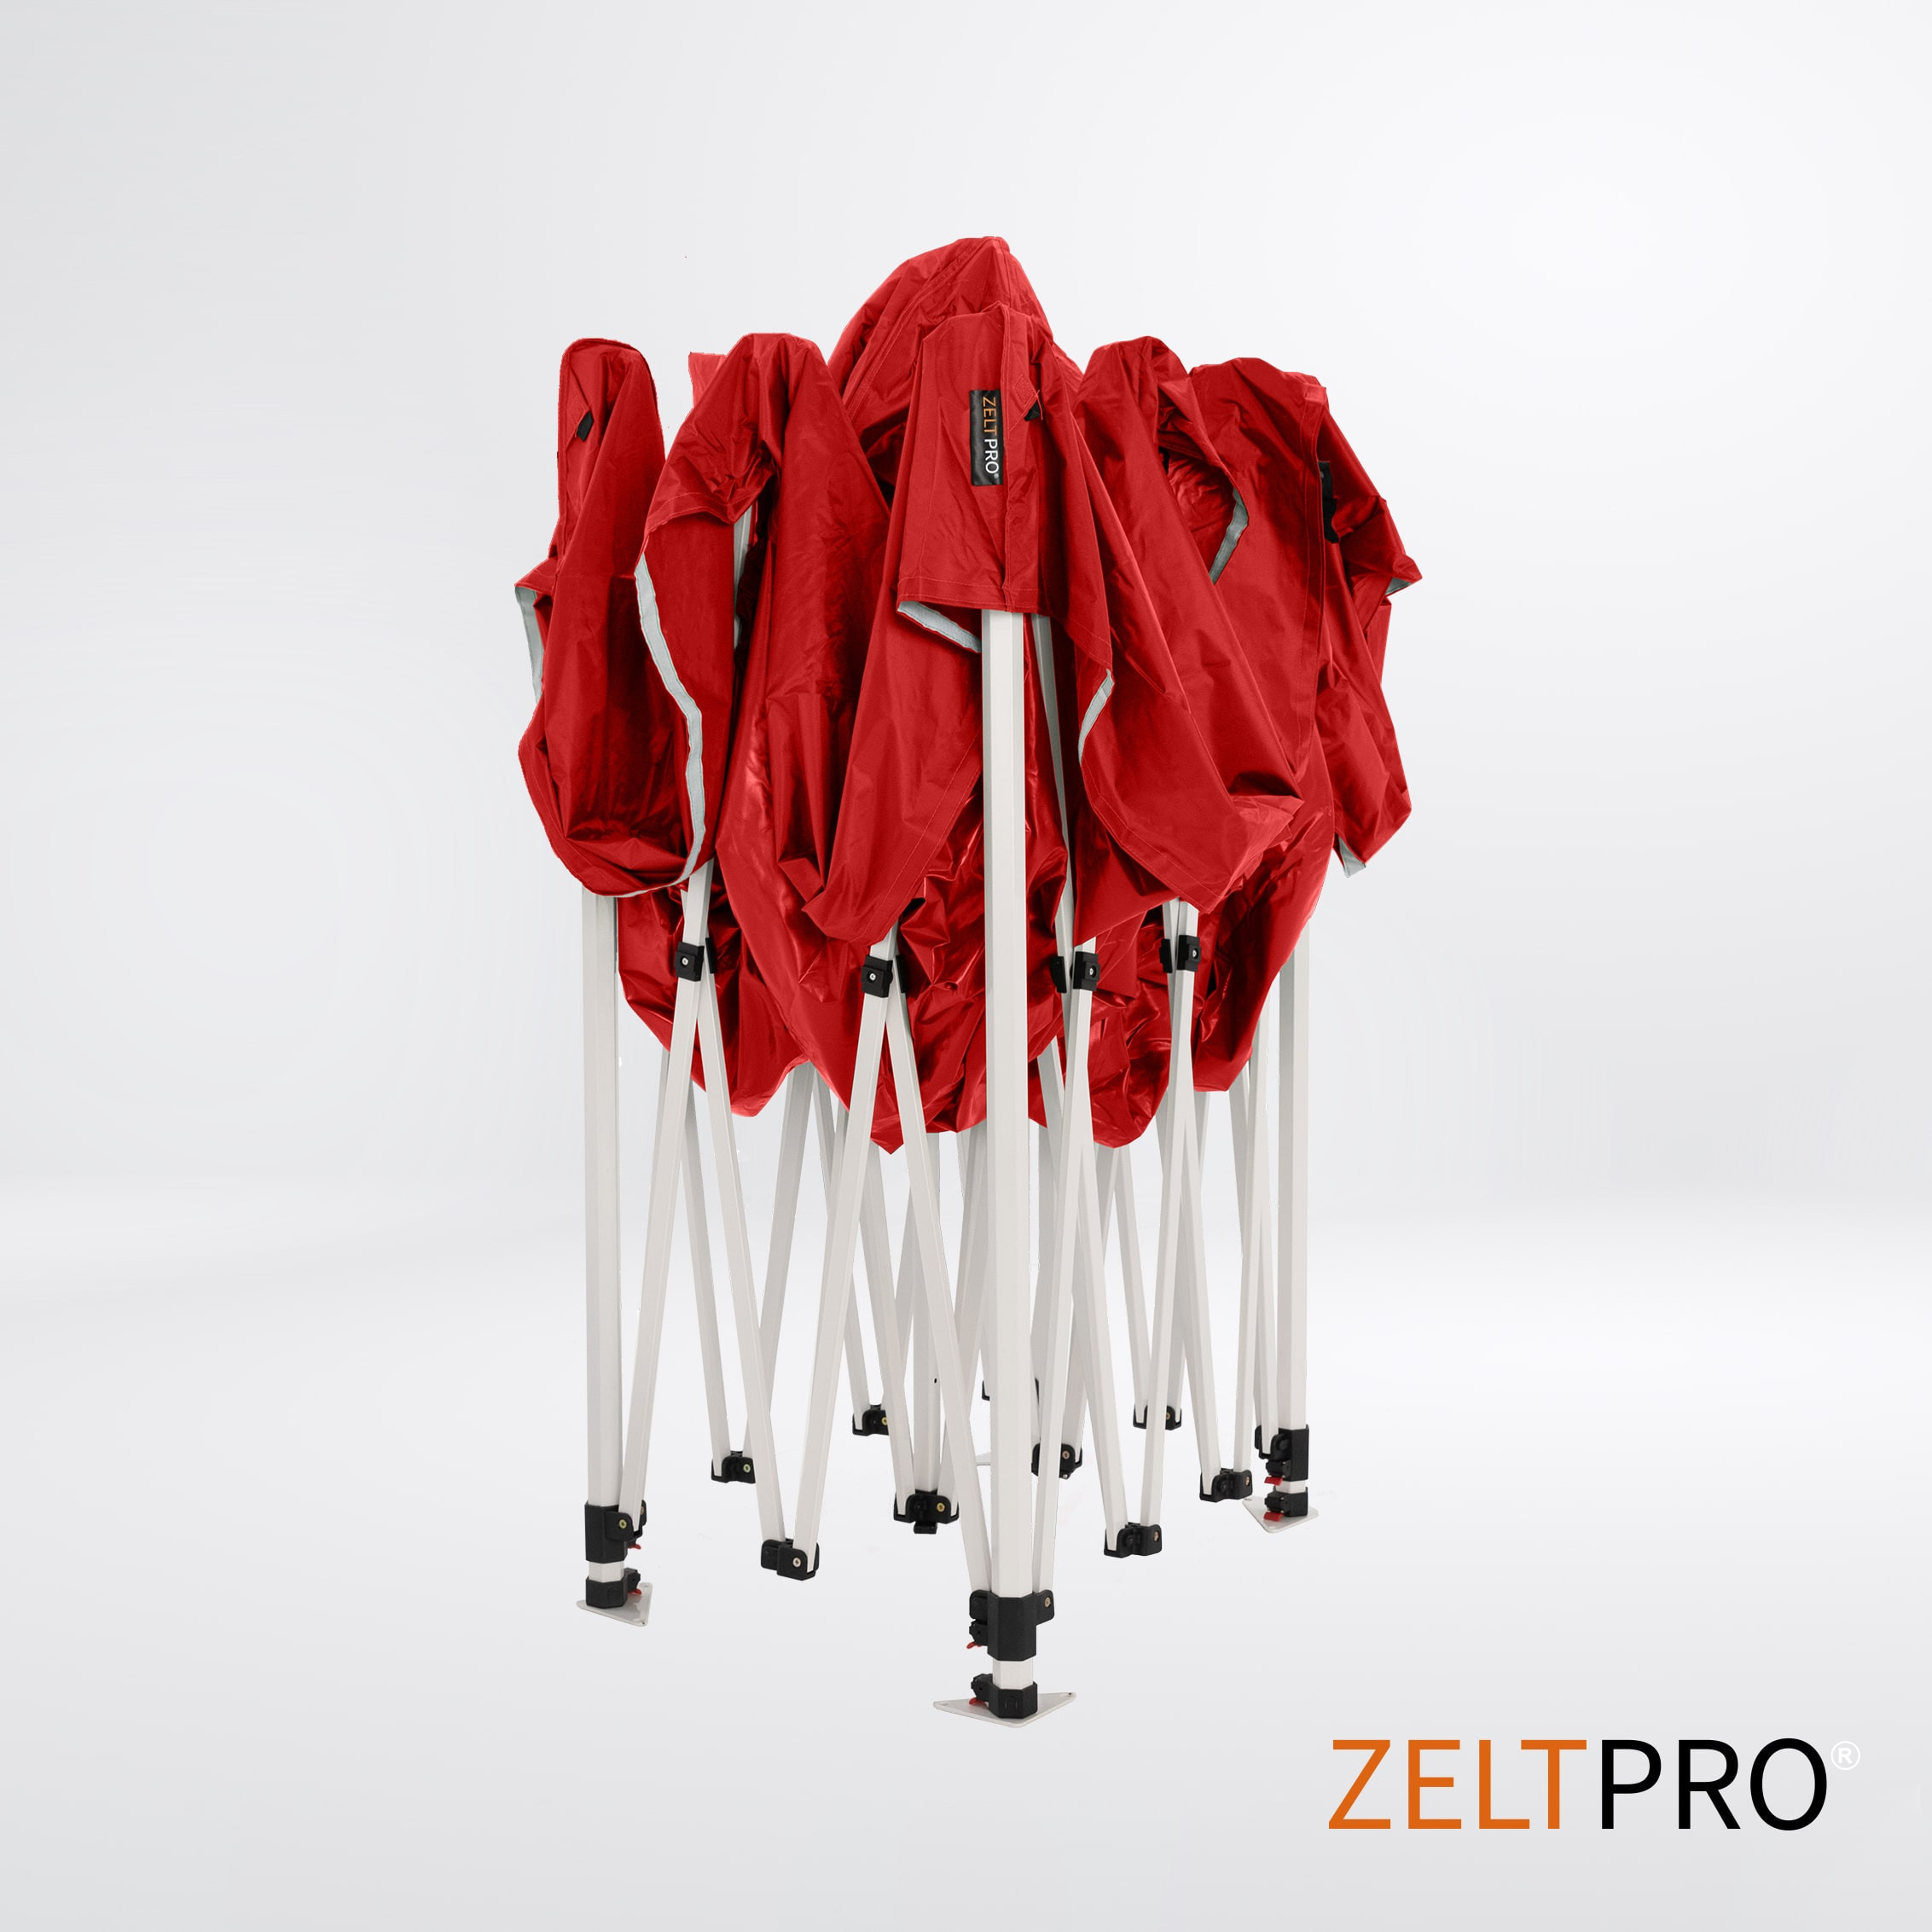 Pop-up telk 3x2 punane Zeltpro PROFRAME